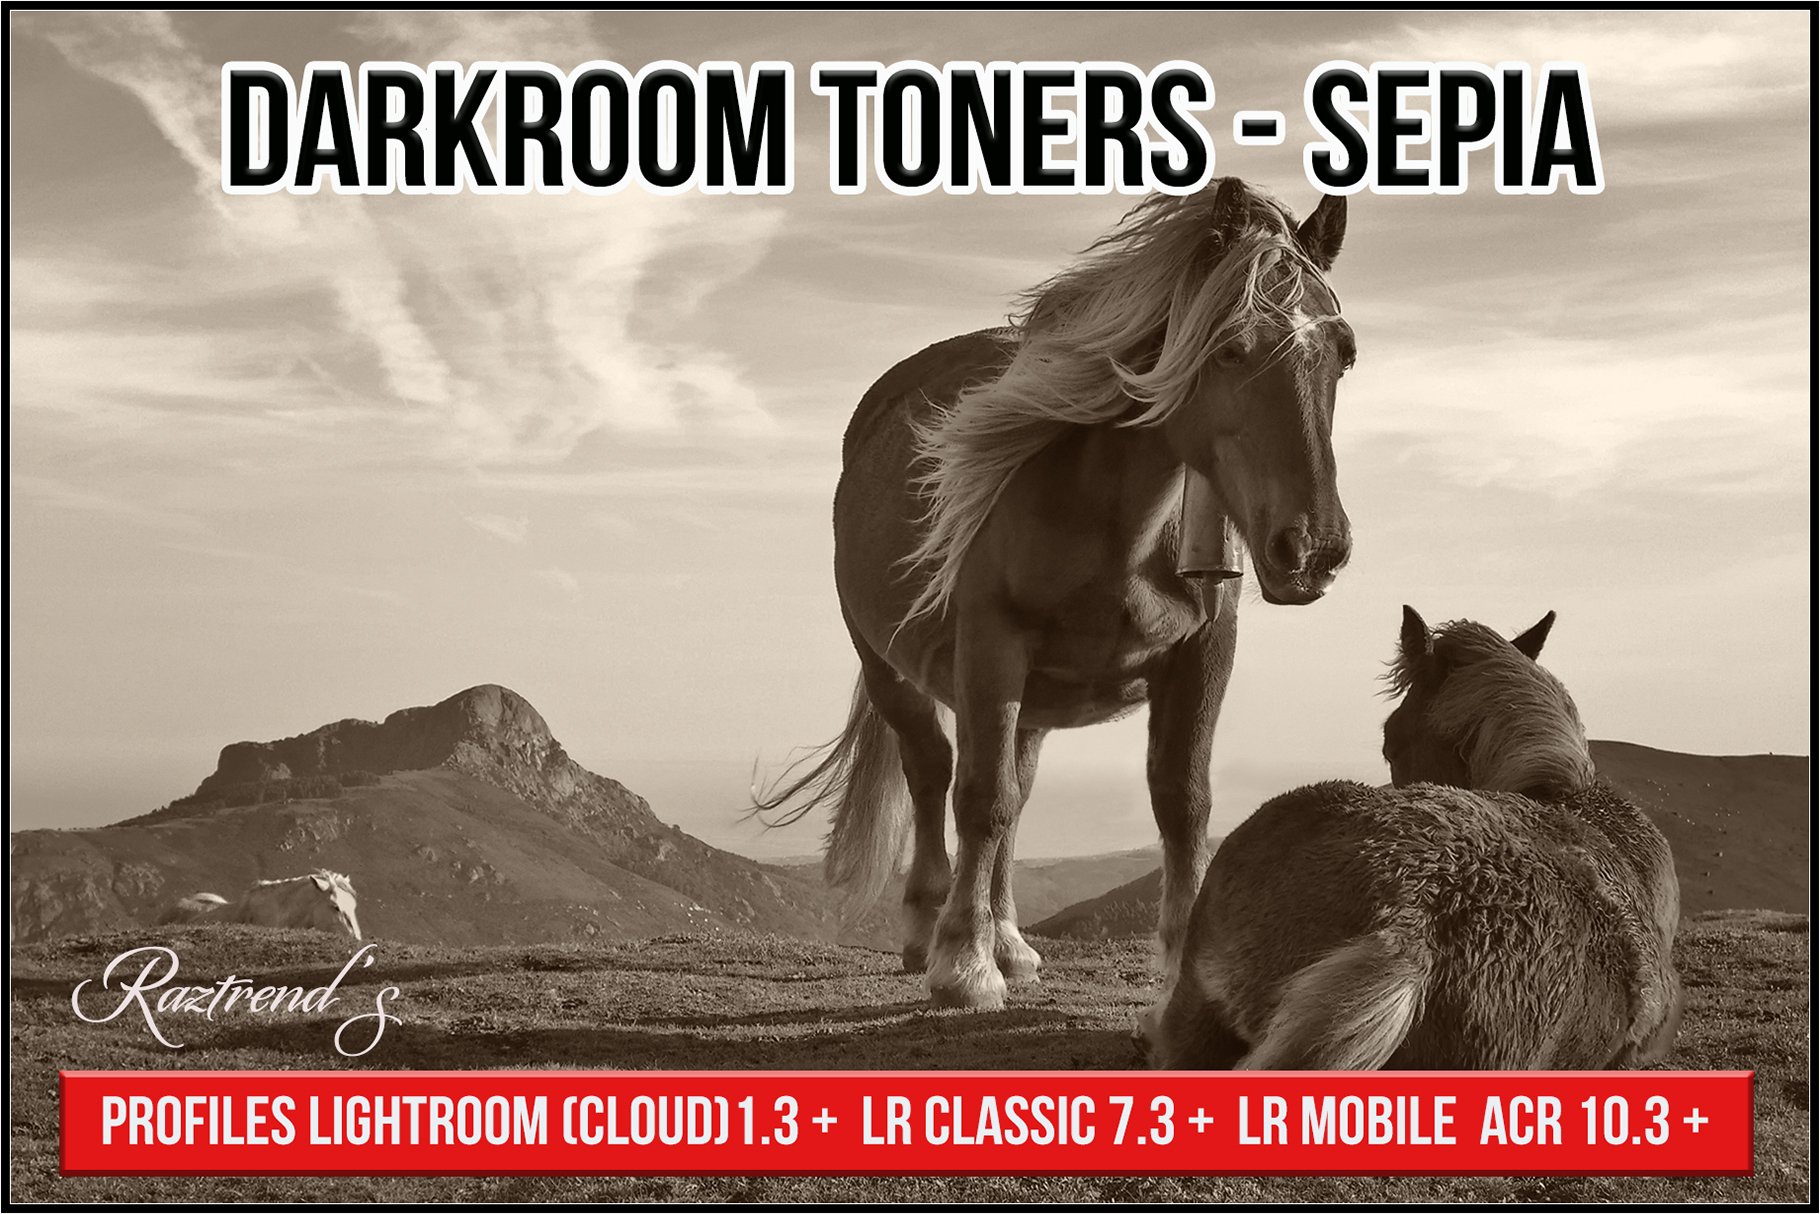 Darkroom Toners - Sepia Profilescover image.